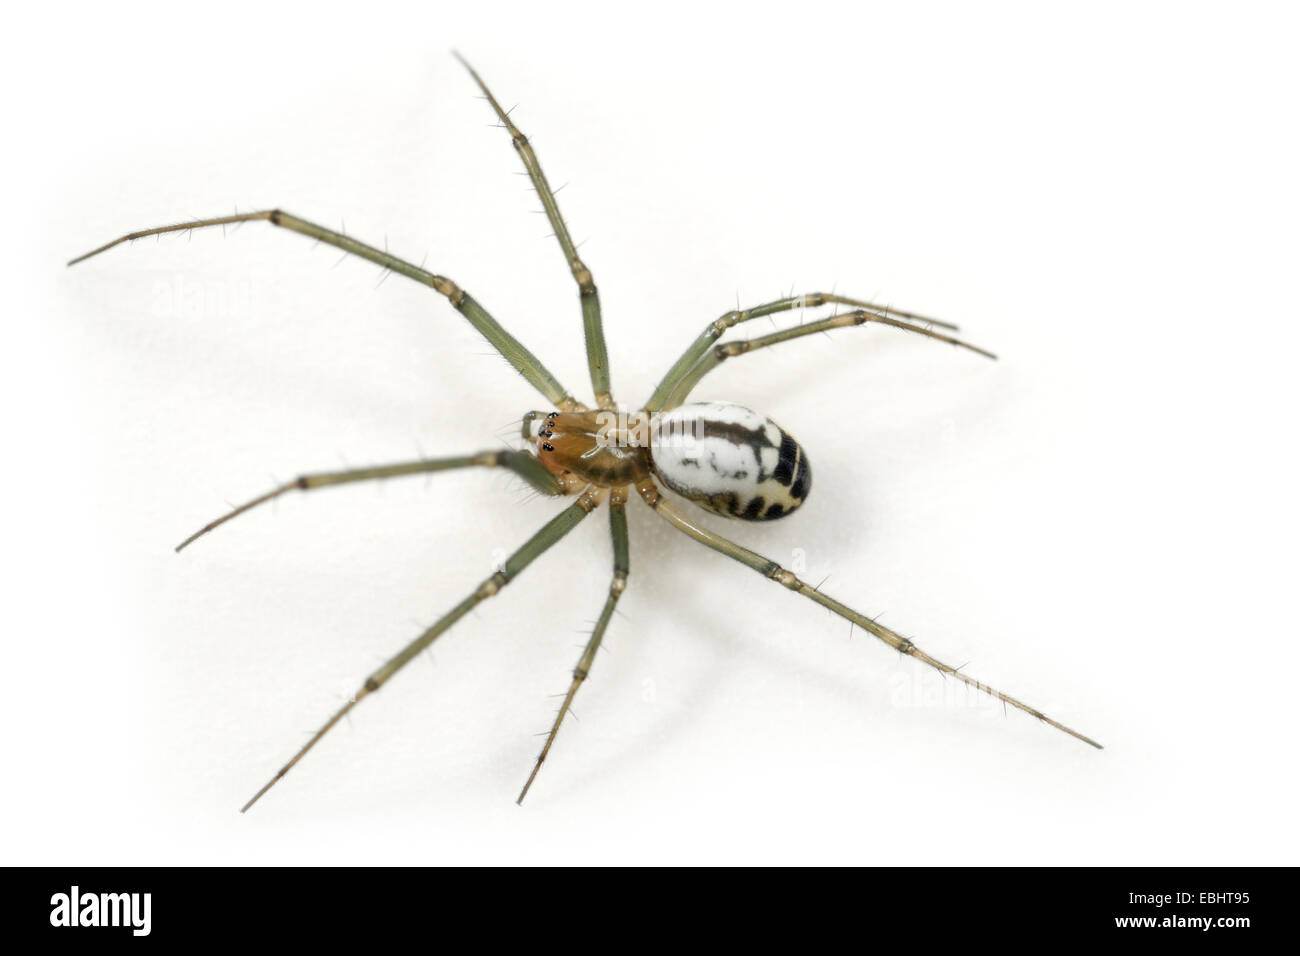 Una hembra (Neriene Black-Tailed Hammock-Spider emphana) sobre un fondo blanco, parte de la familia Linyphiidae - Sheetweb tejedores. Foto de stock